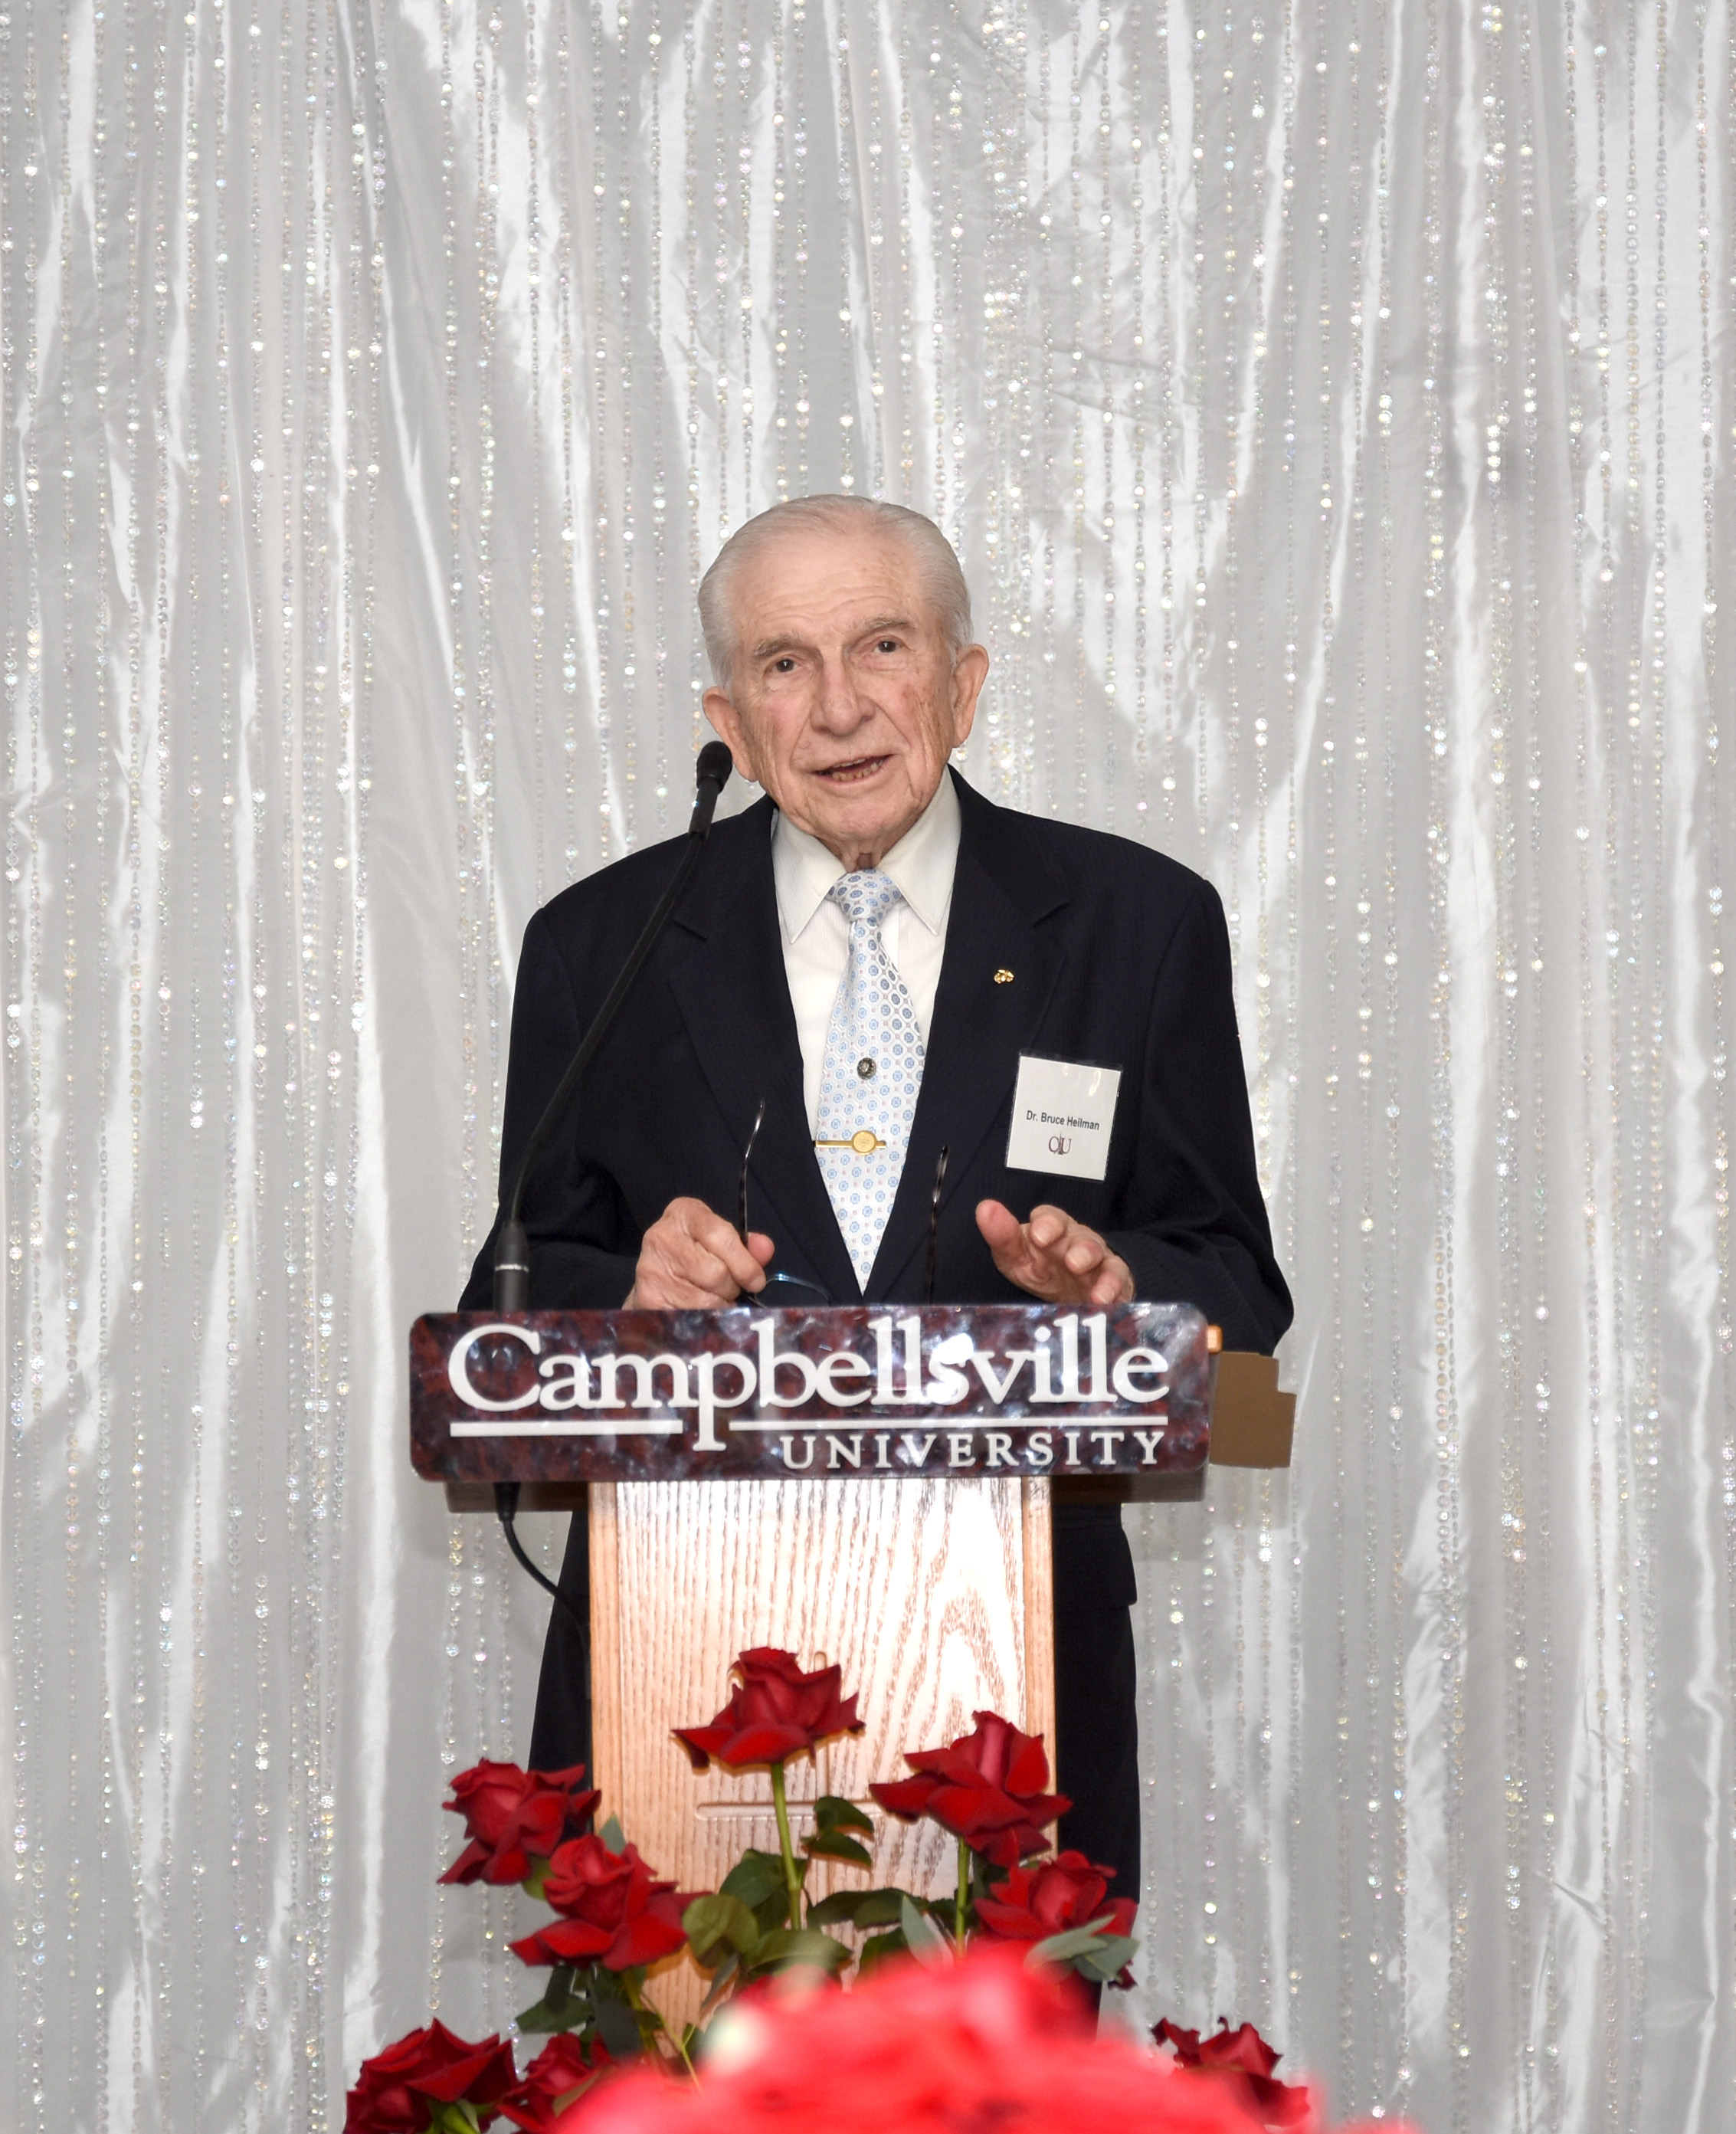 Dr. E. Bruce Heilman, Campbellsville University 1949 alumnus and CU Board of Trustees member, was the guest speaker. (CU Photo by Joshua Williams)